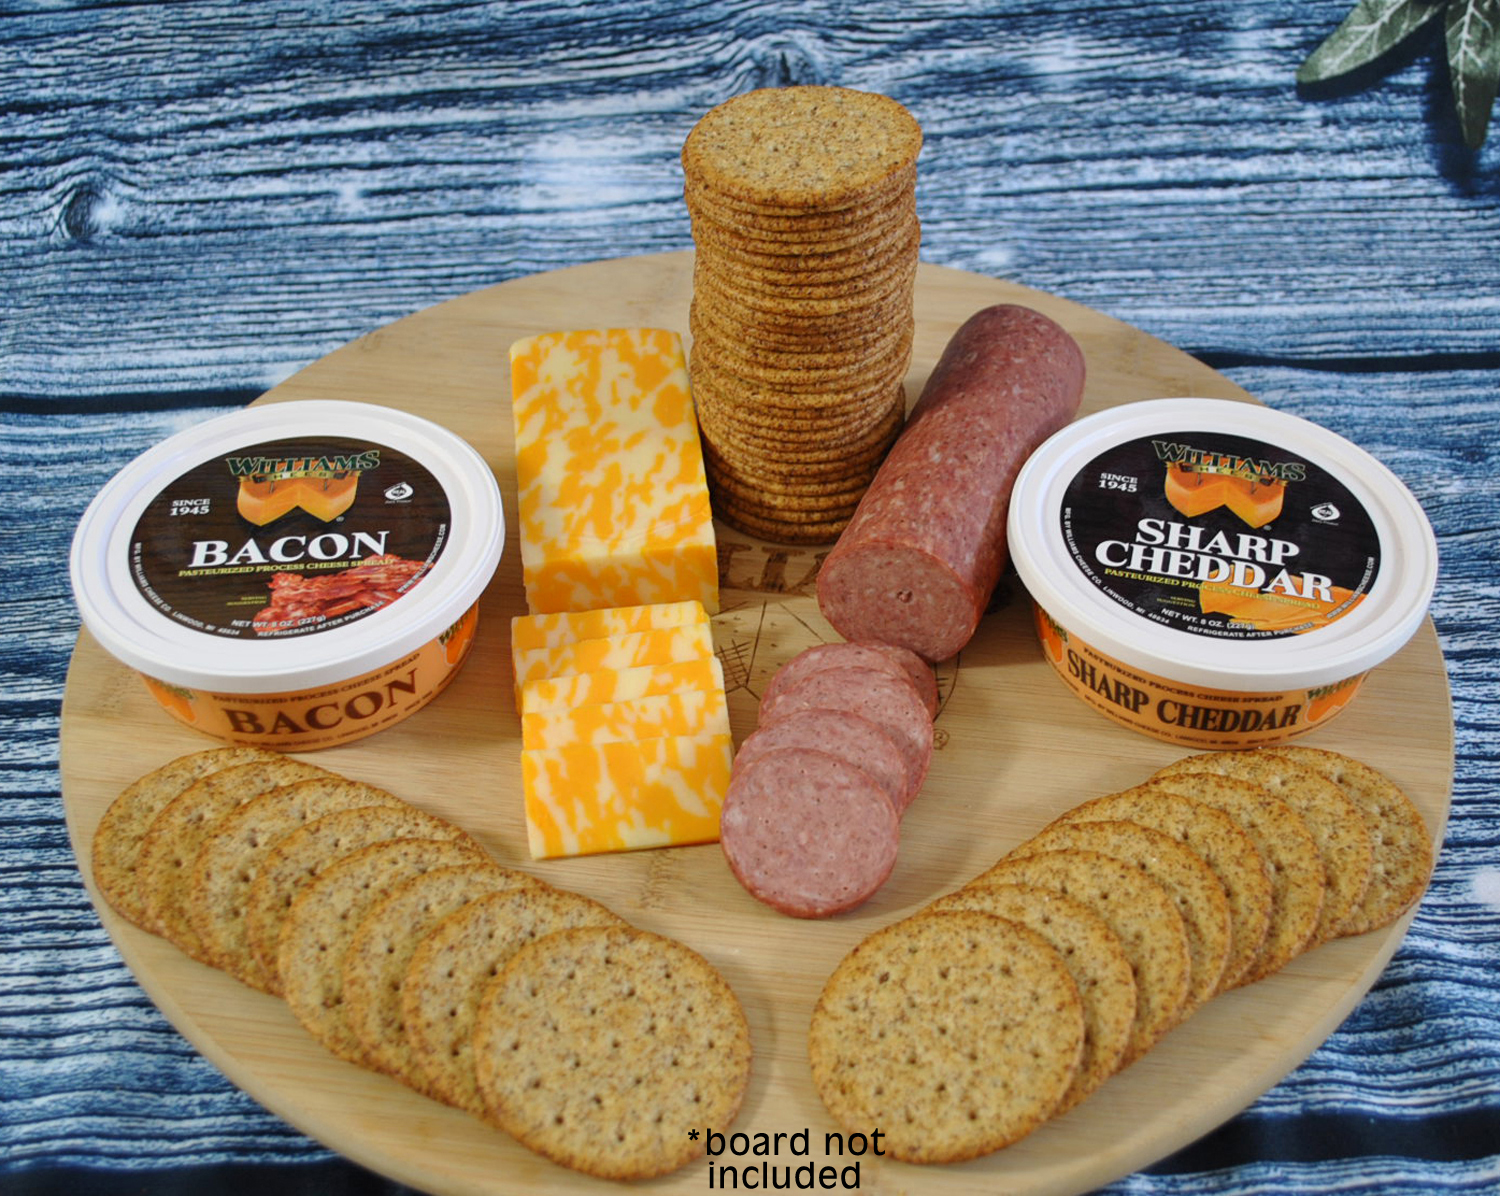 Father's Day snackle box: hot crackers, soppressata, Bacon jam